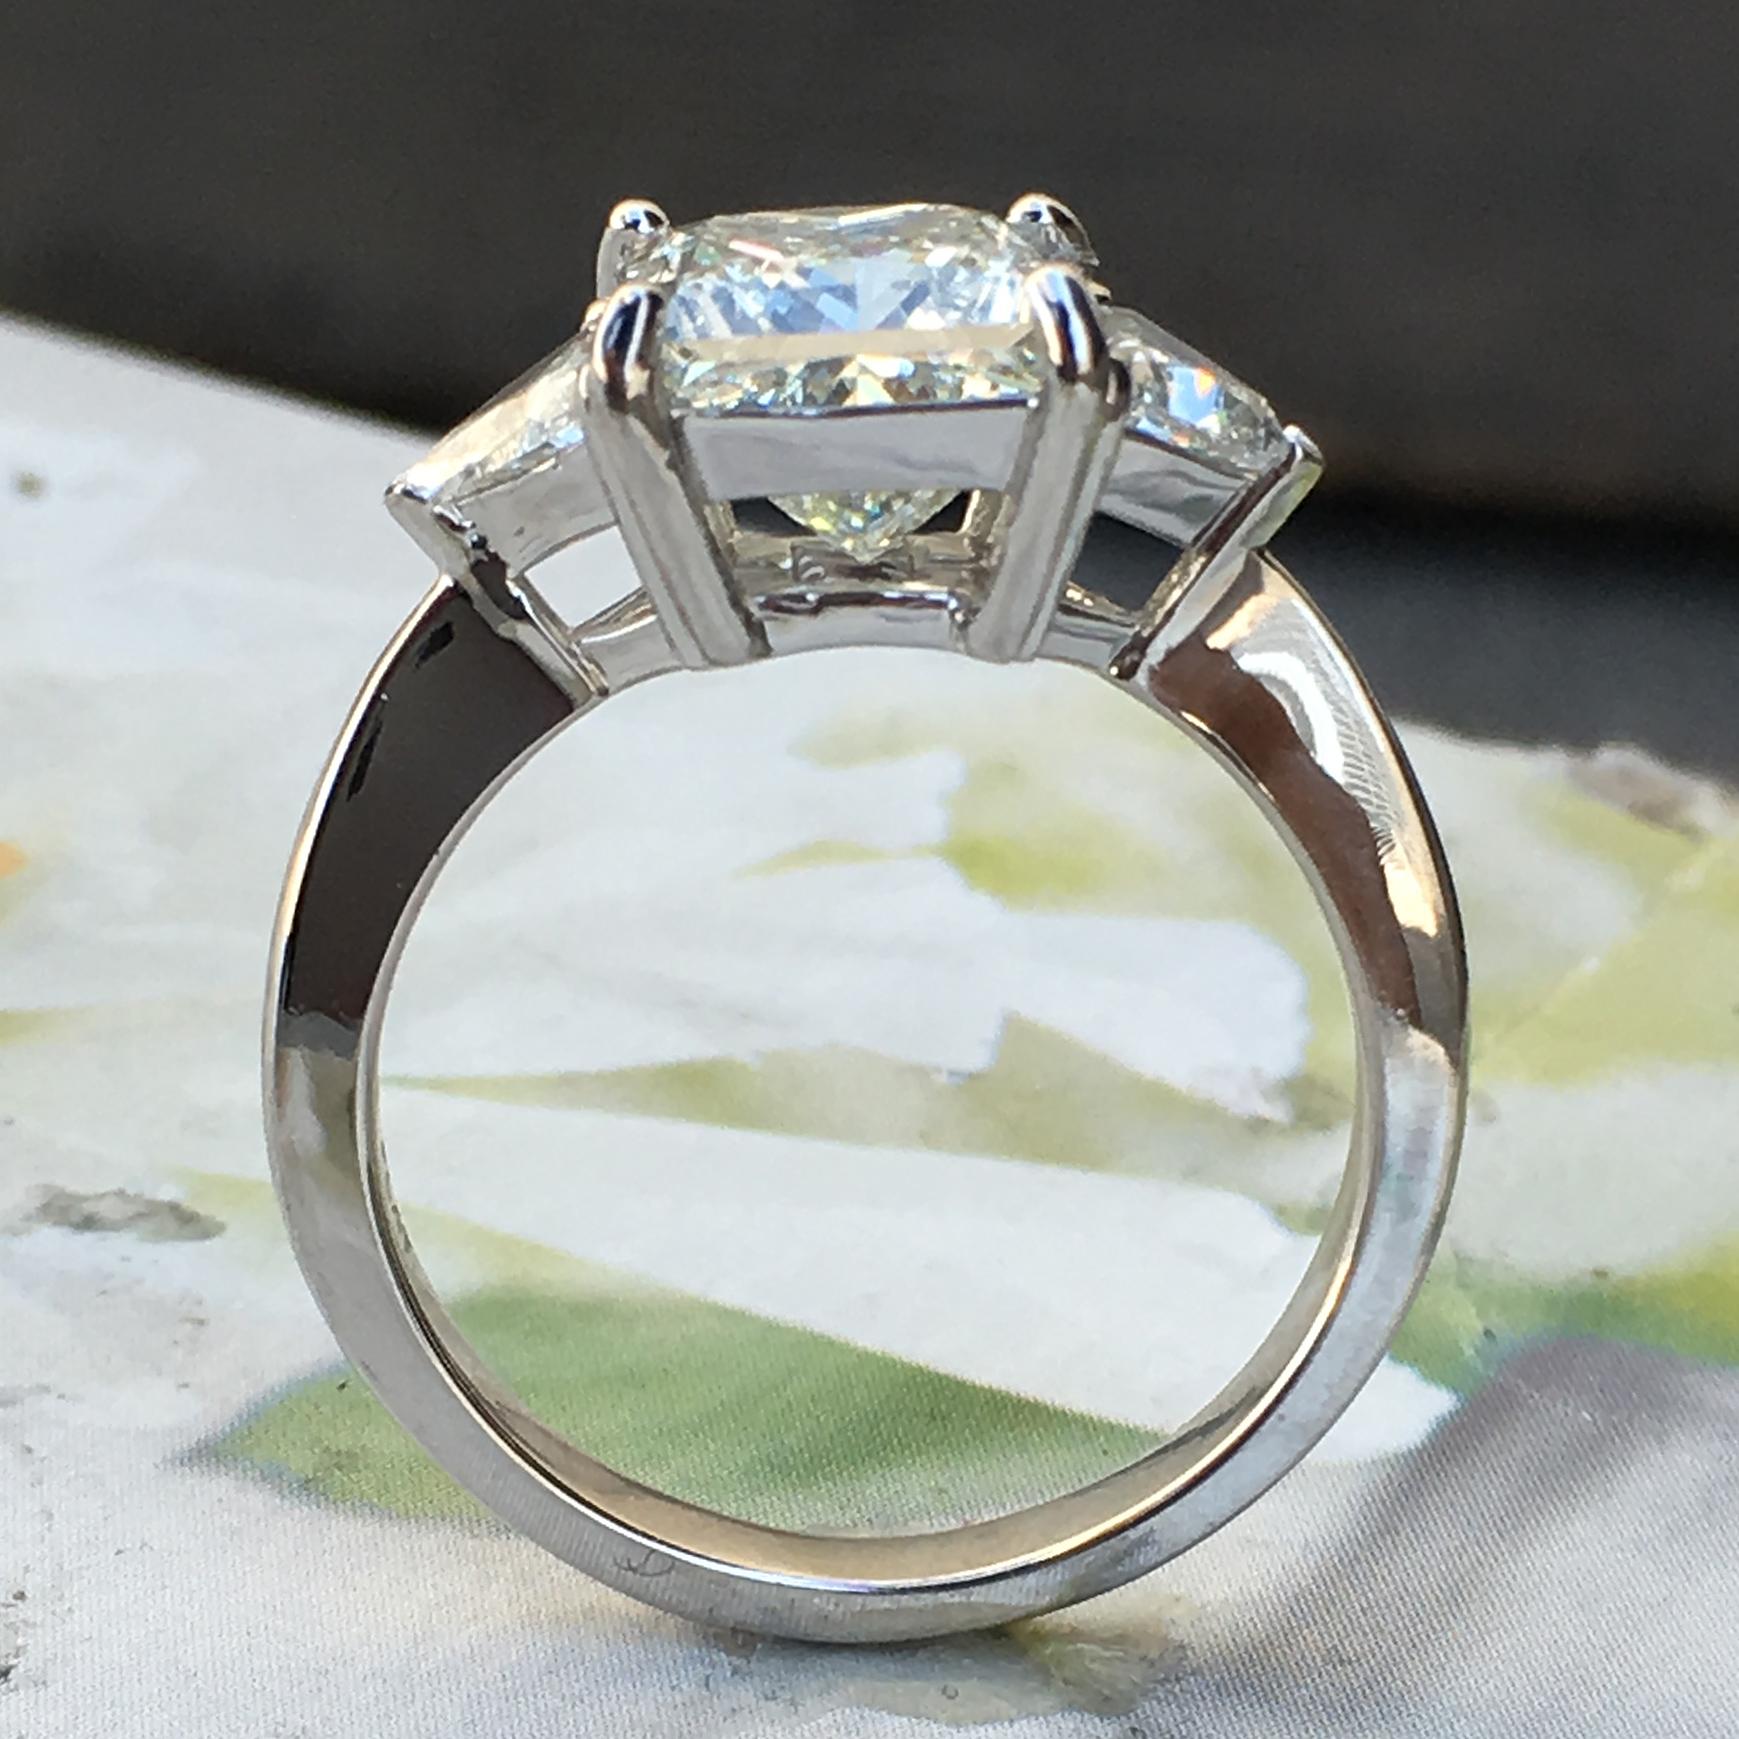 4.6 carat diamond ring